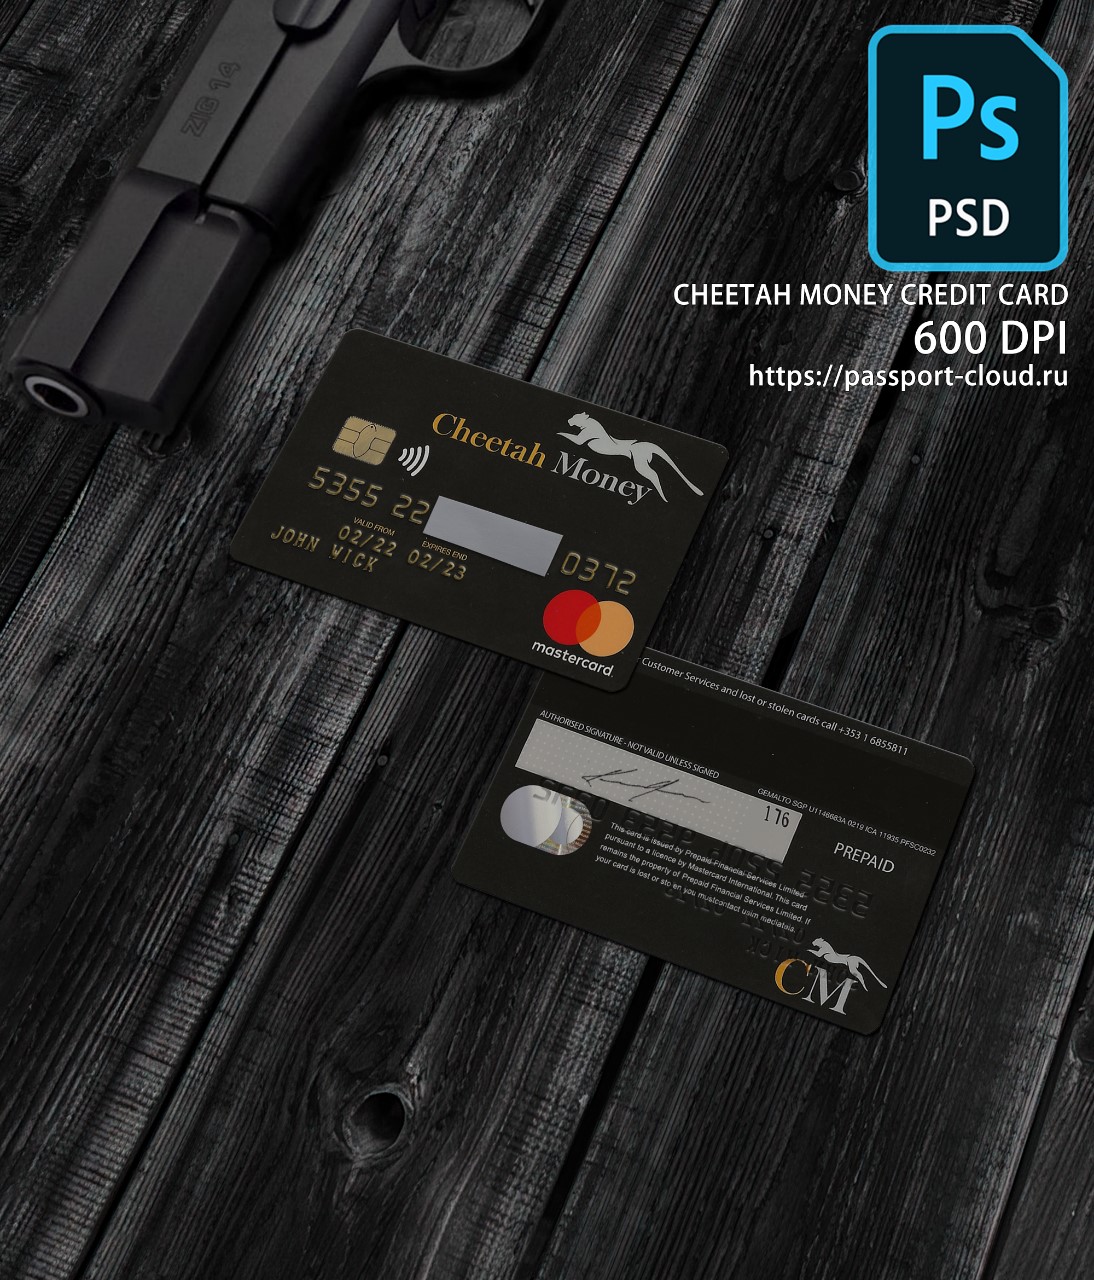 Cheetah Money Credit Card PSD1